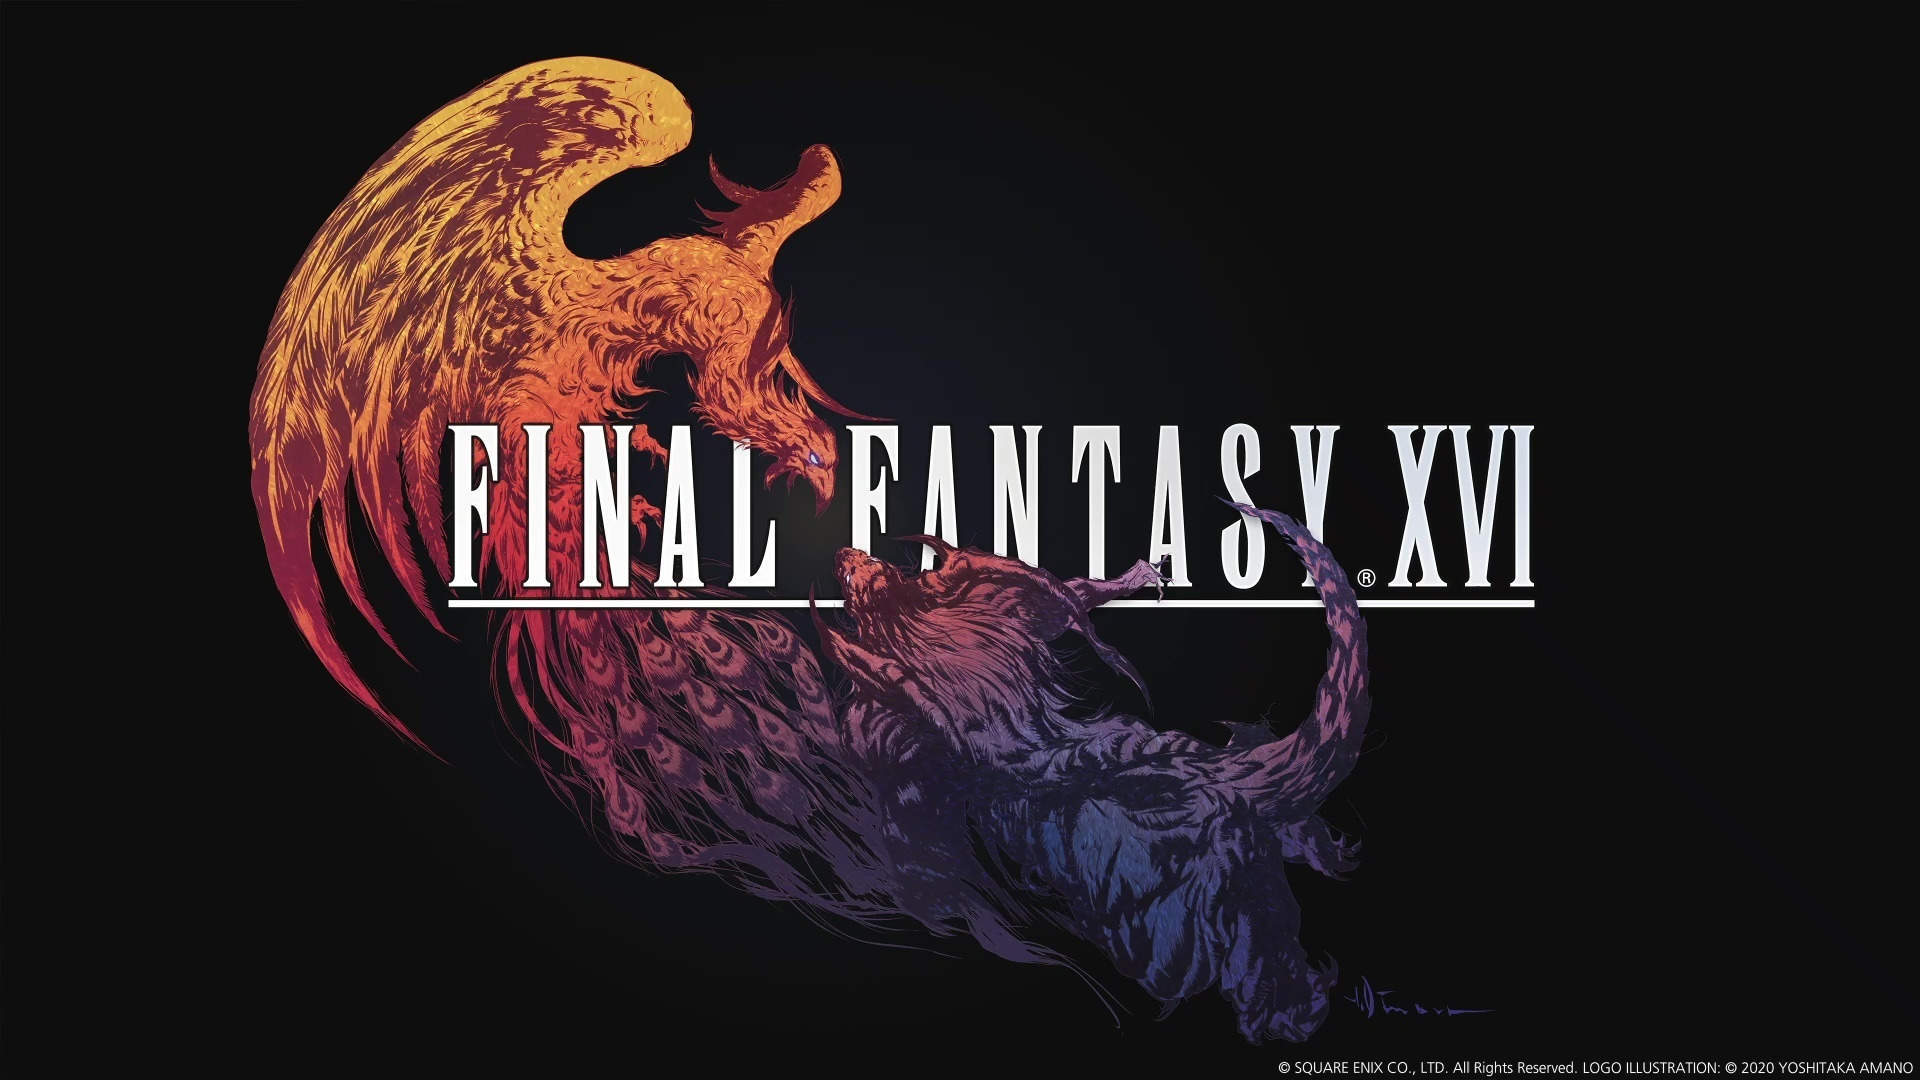 Final Fantasy XVI 2021 release